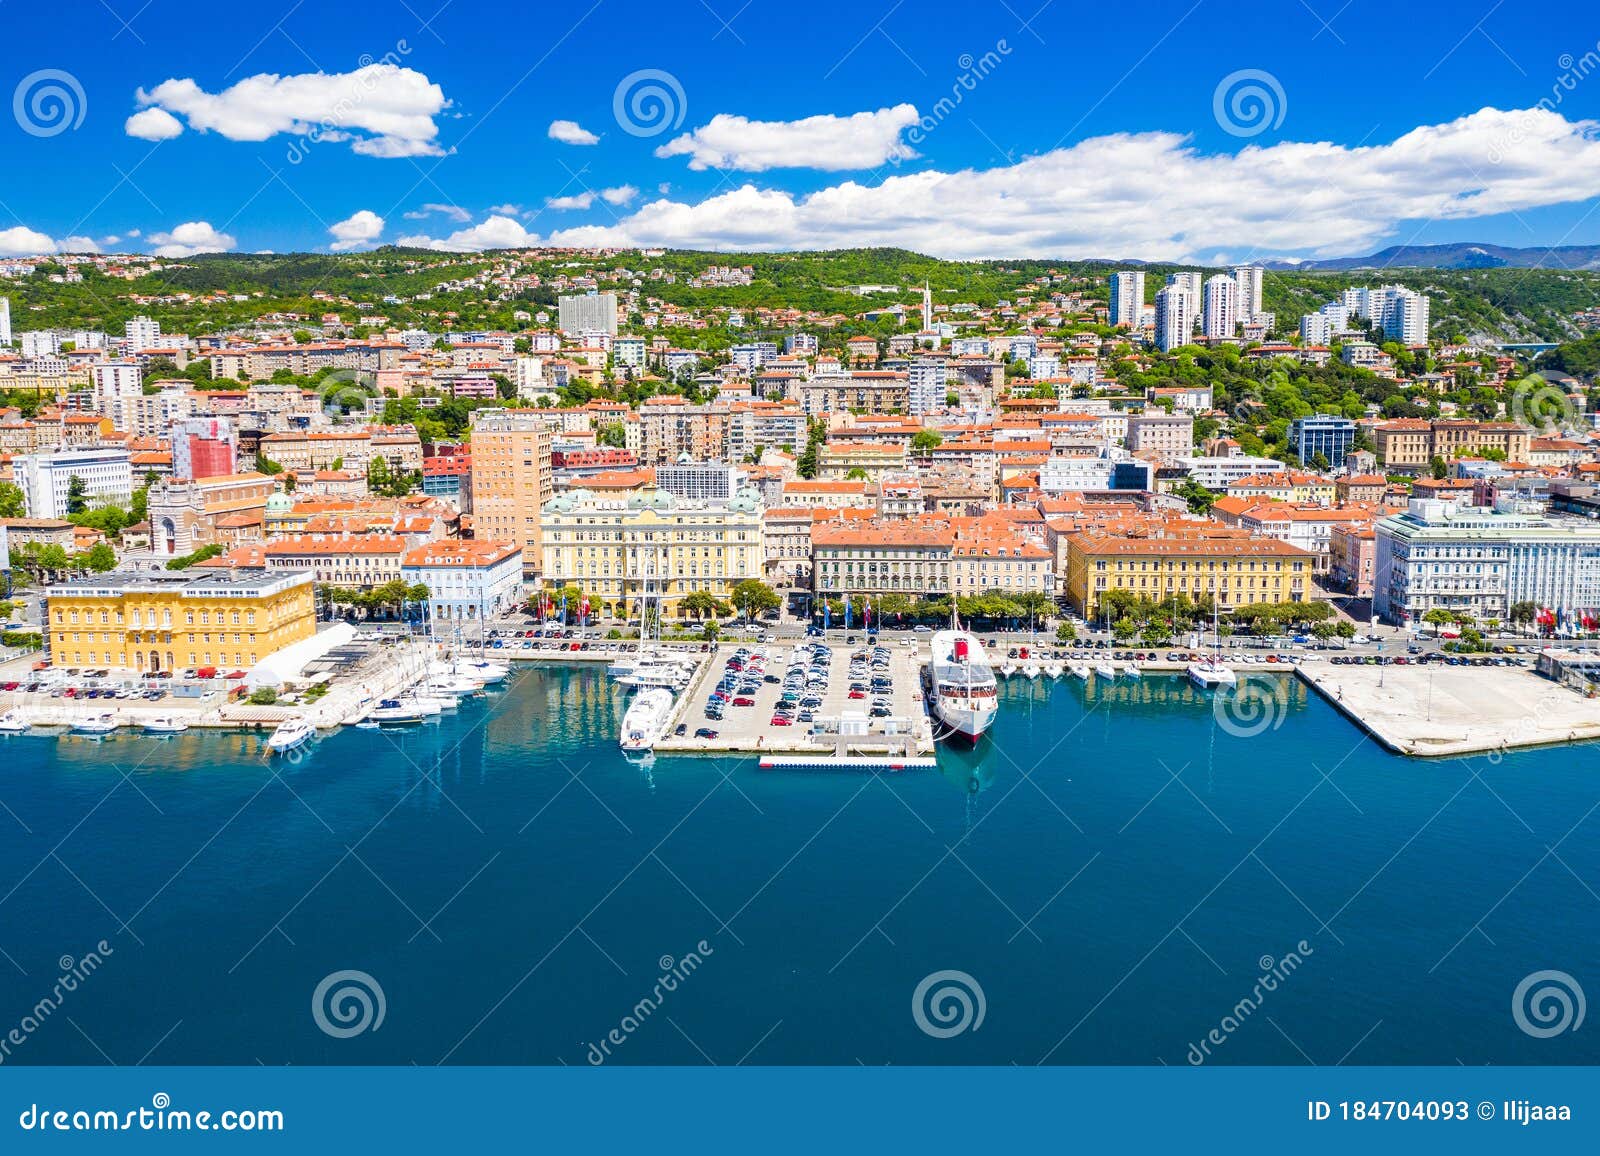 croatia, city of rijeka, aerial panoramic view